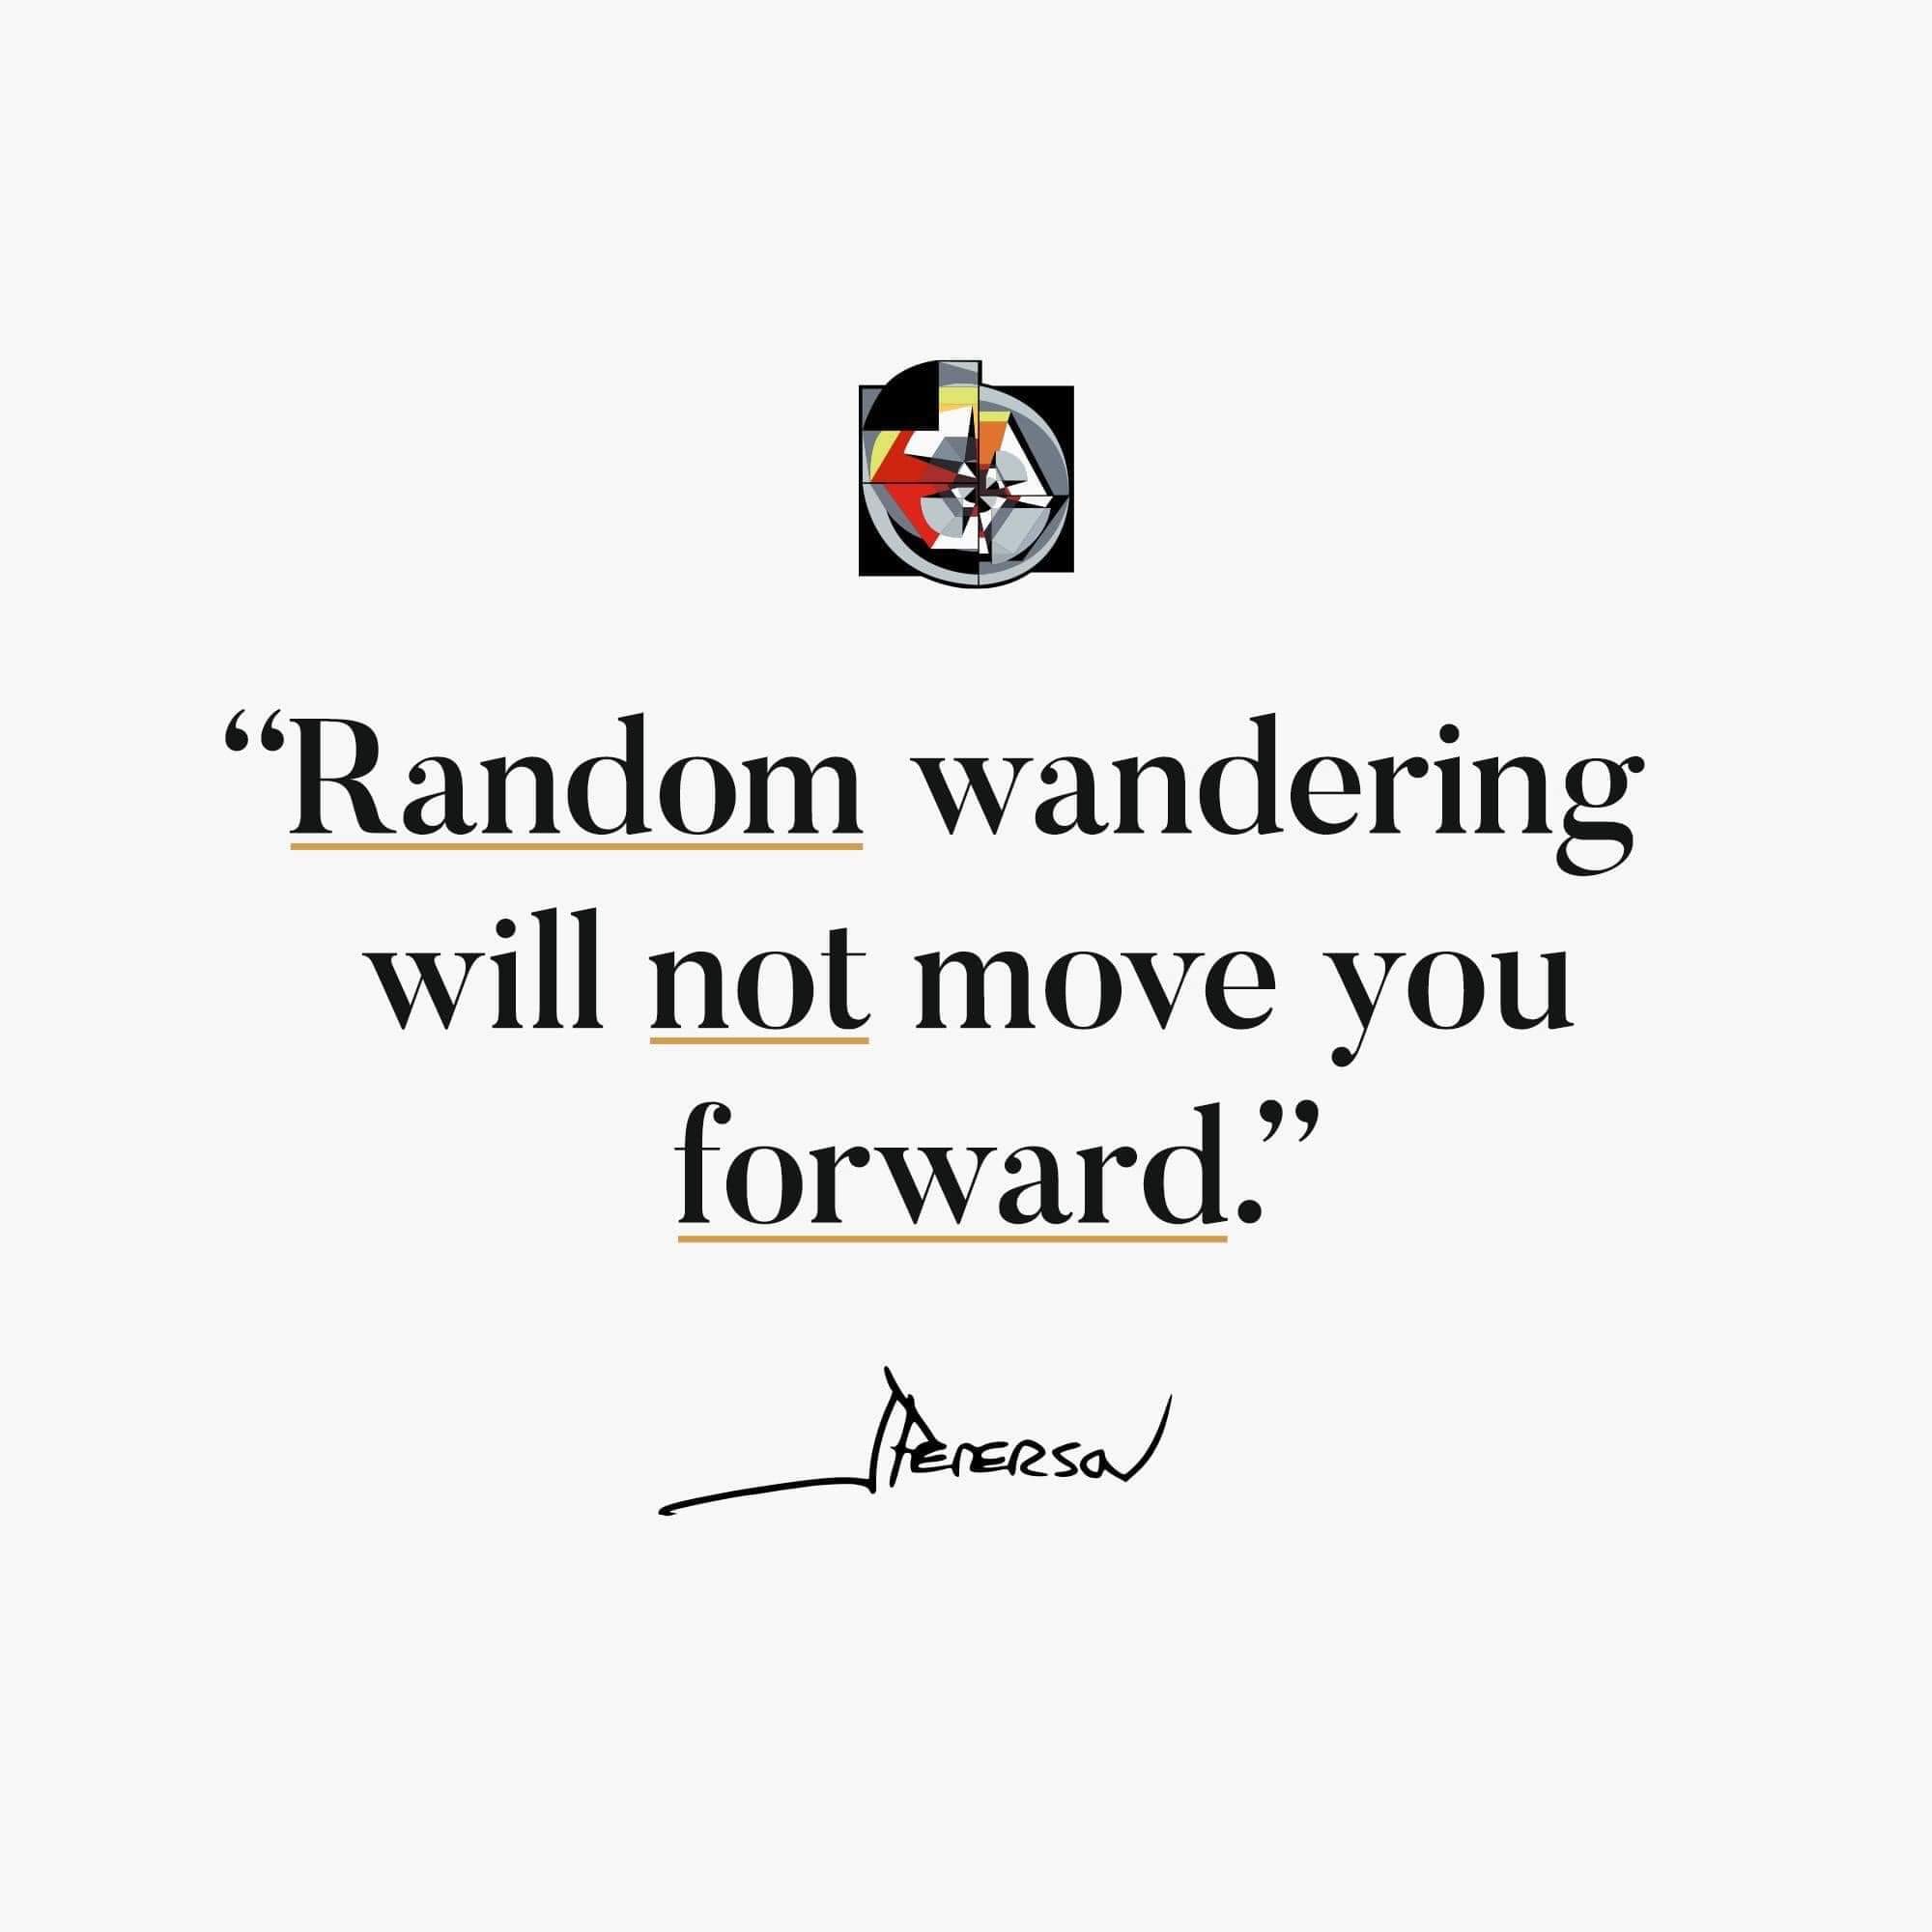 random_wandering_will_not_move_you_forward.jpg